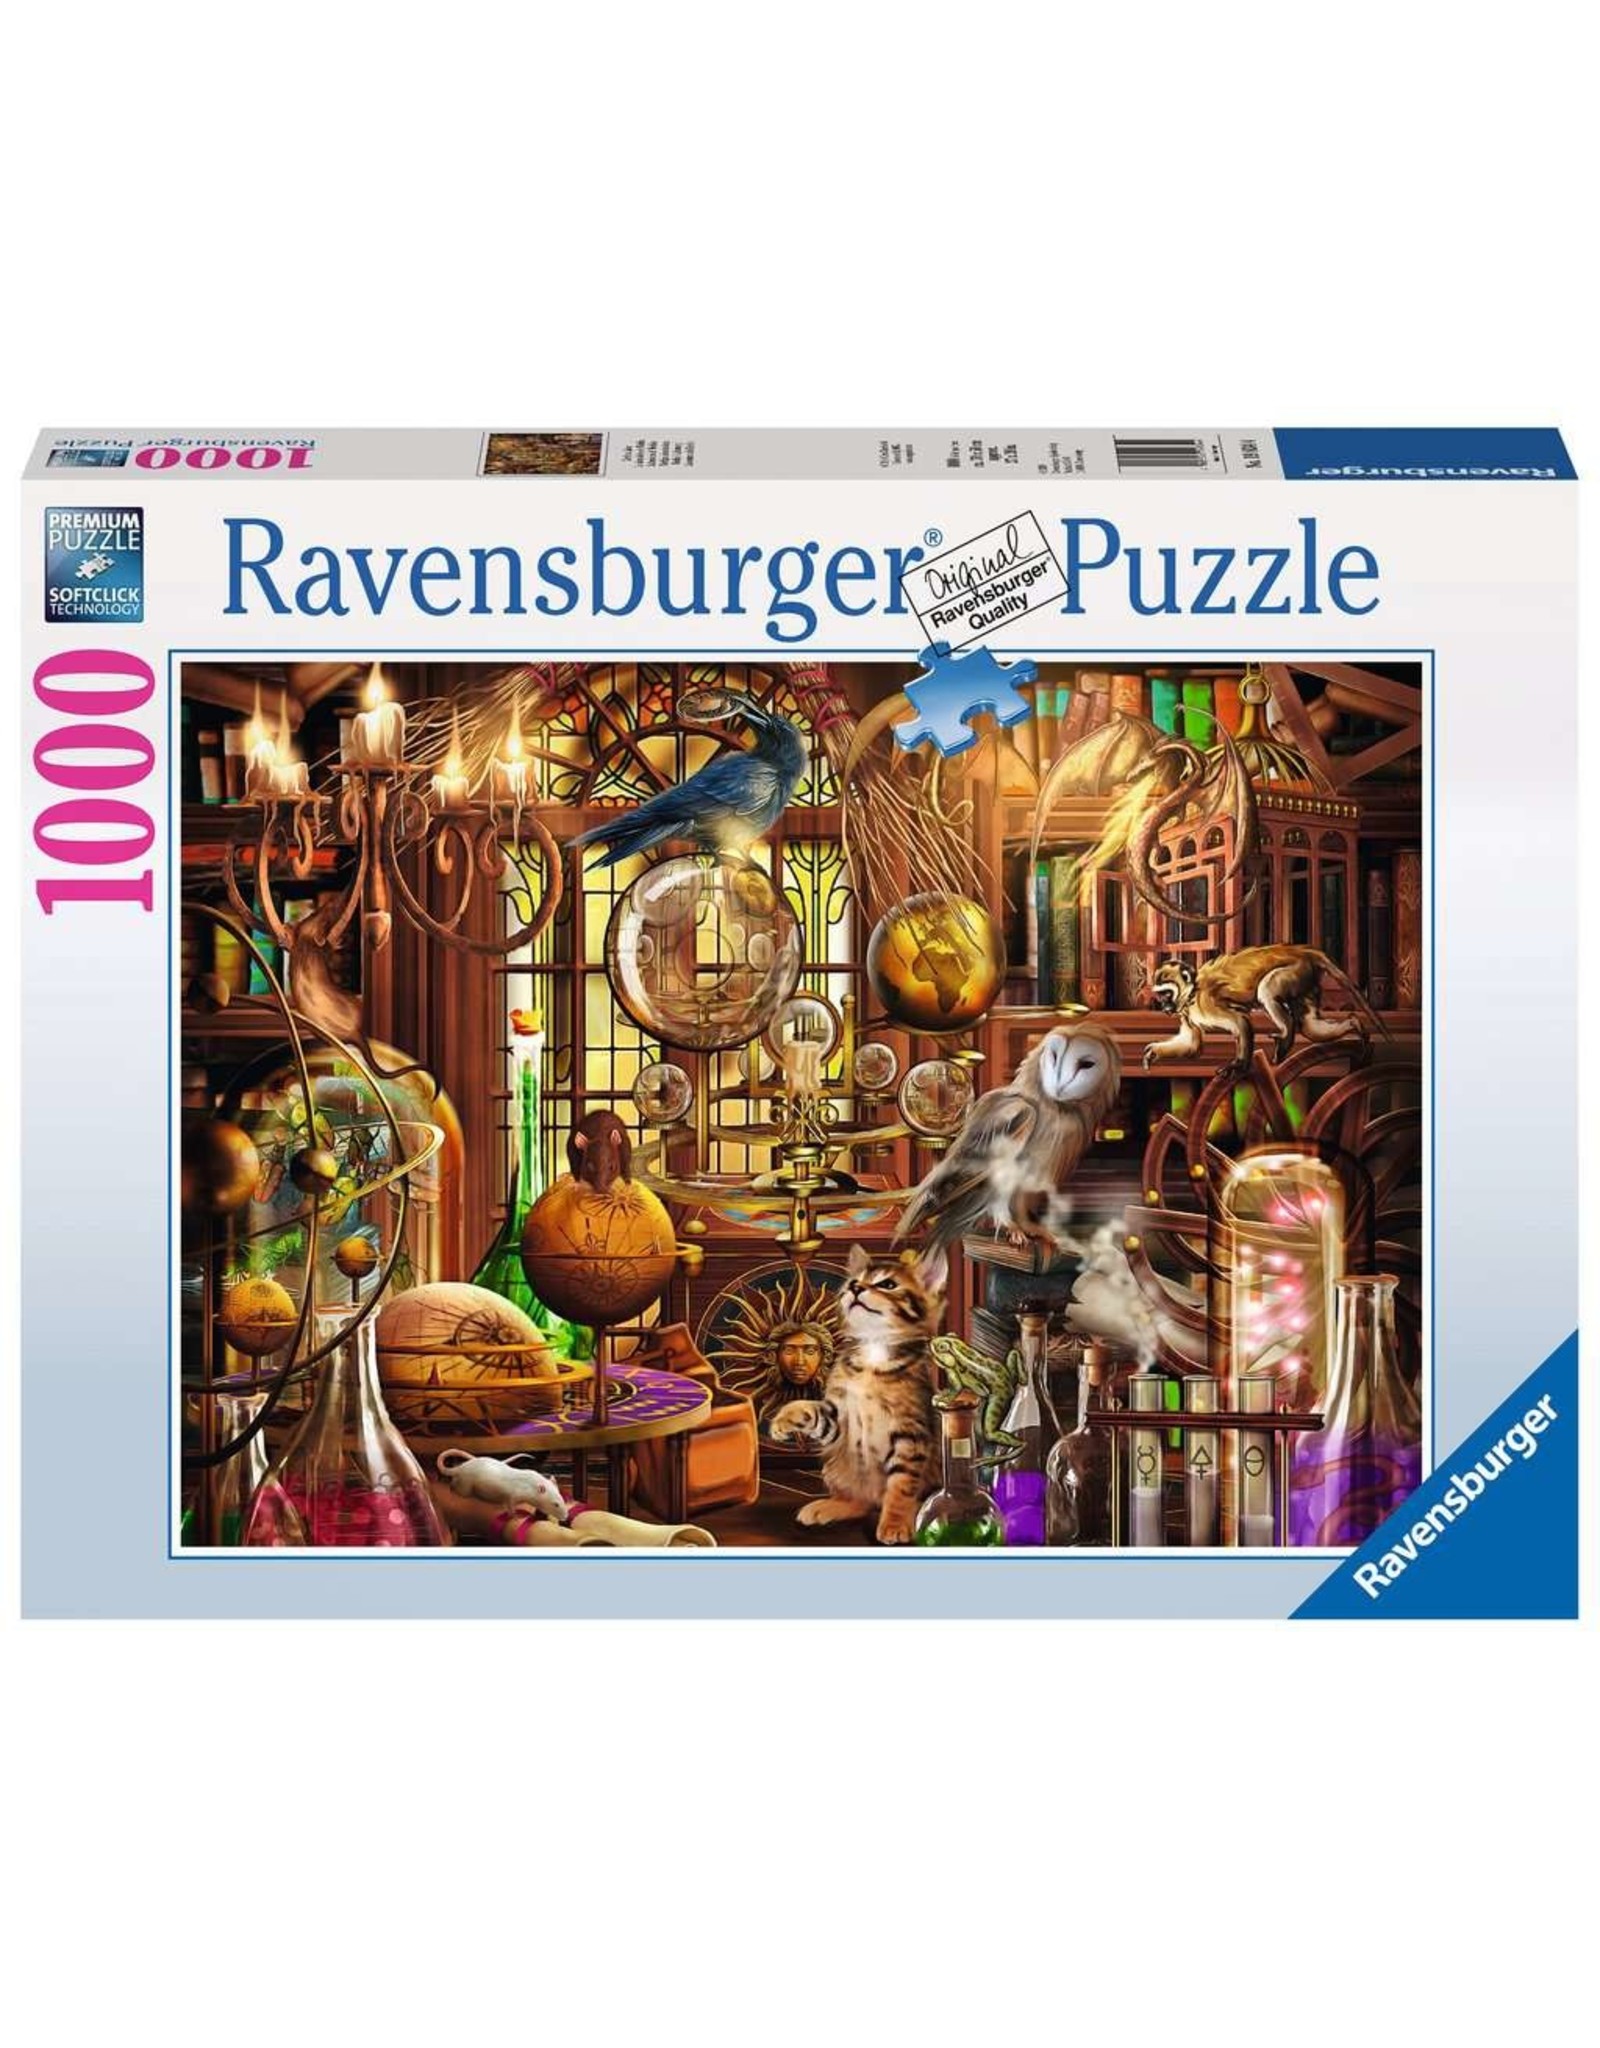 Ravensburger FANTASIA Puzzle 1000P - Merlin